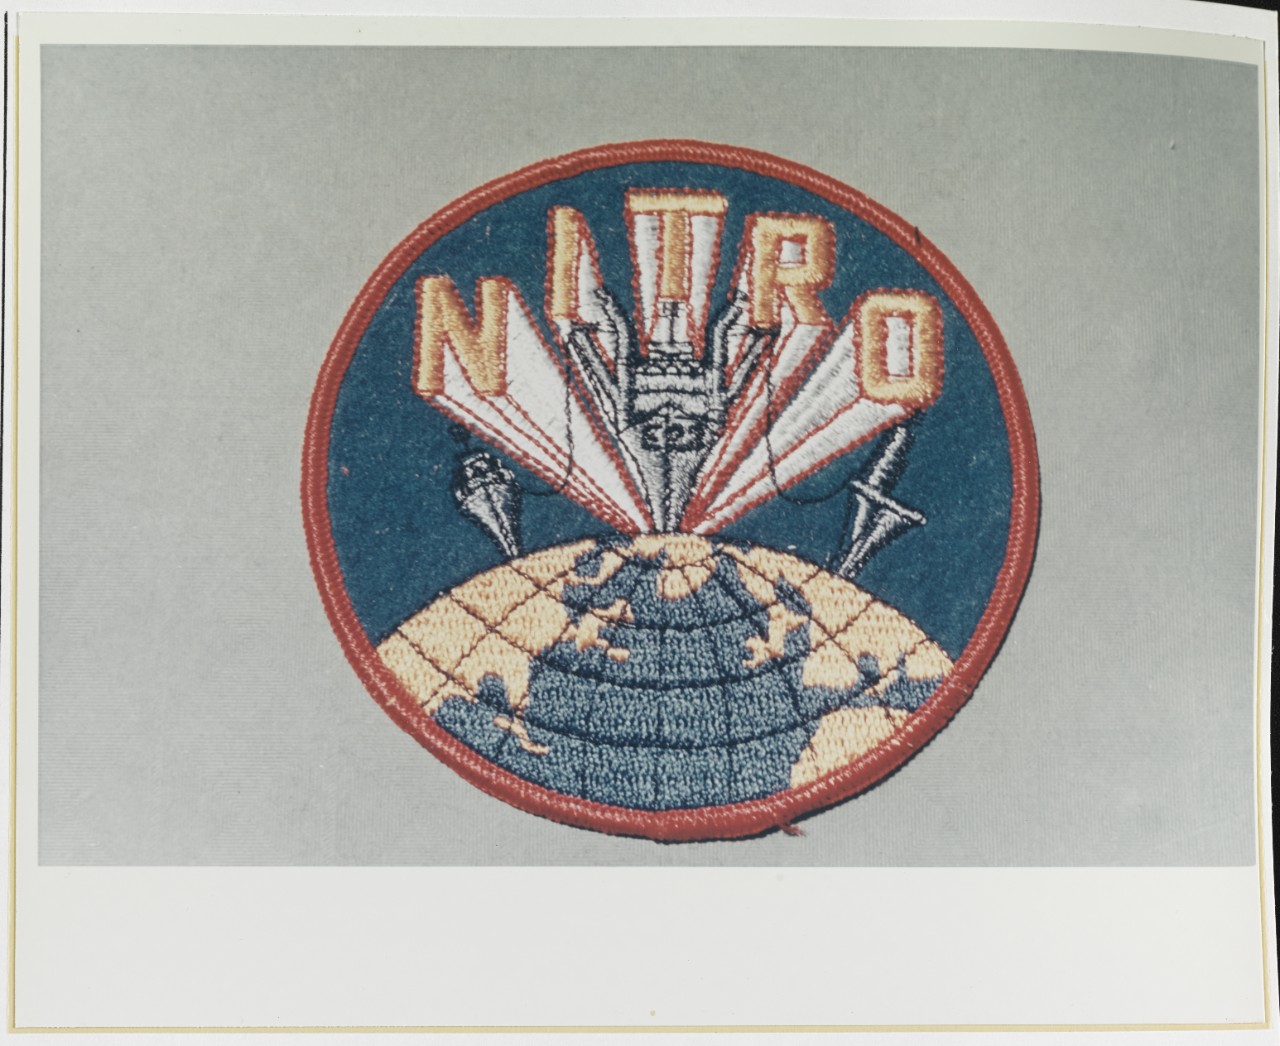 Insignia: USS NITRO (AE-23)